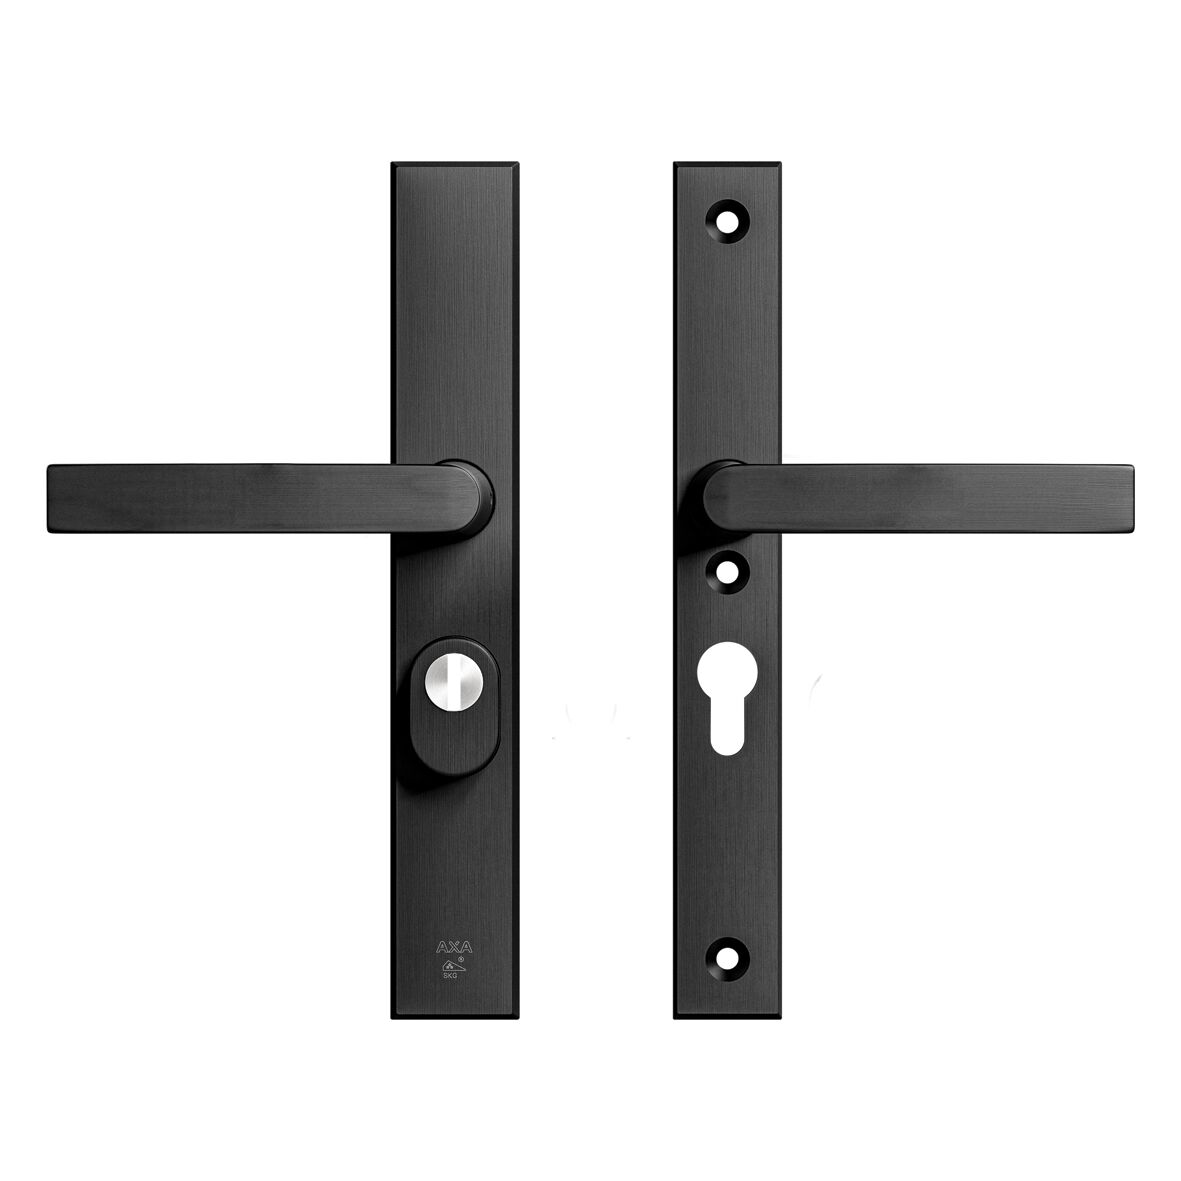 AXA Security fitting edge plus, security fitting edge plus narrow handle block PC55 anti-core pull black